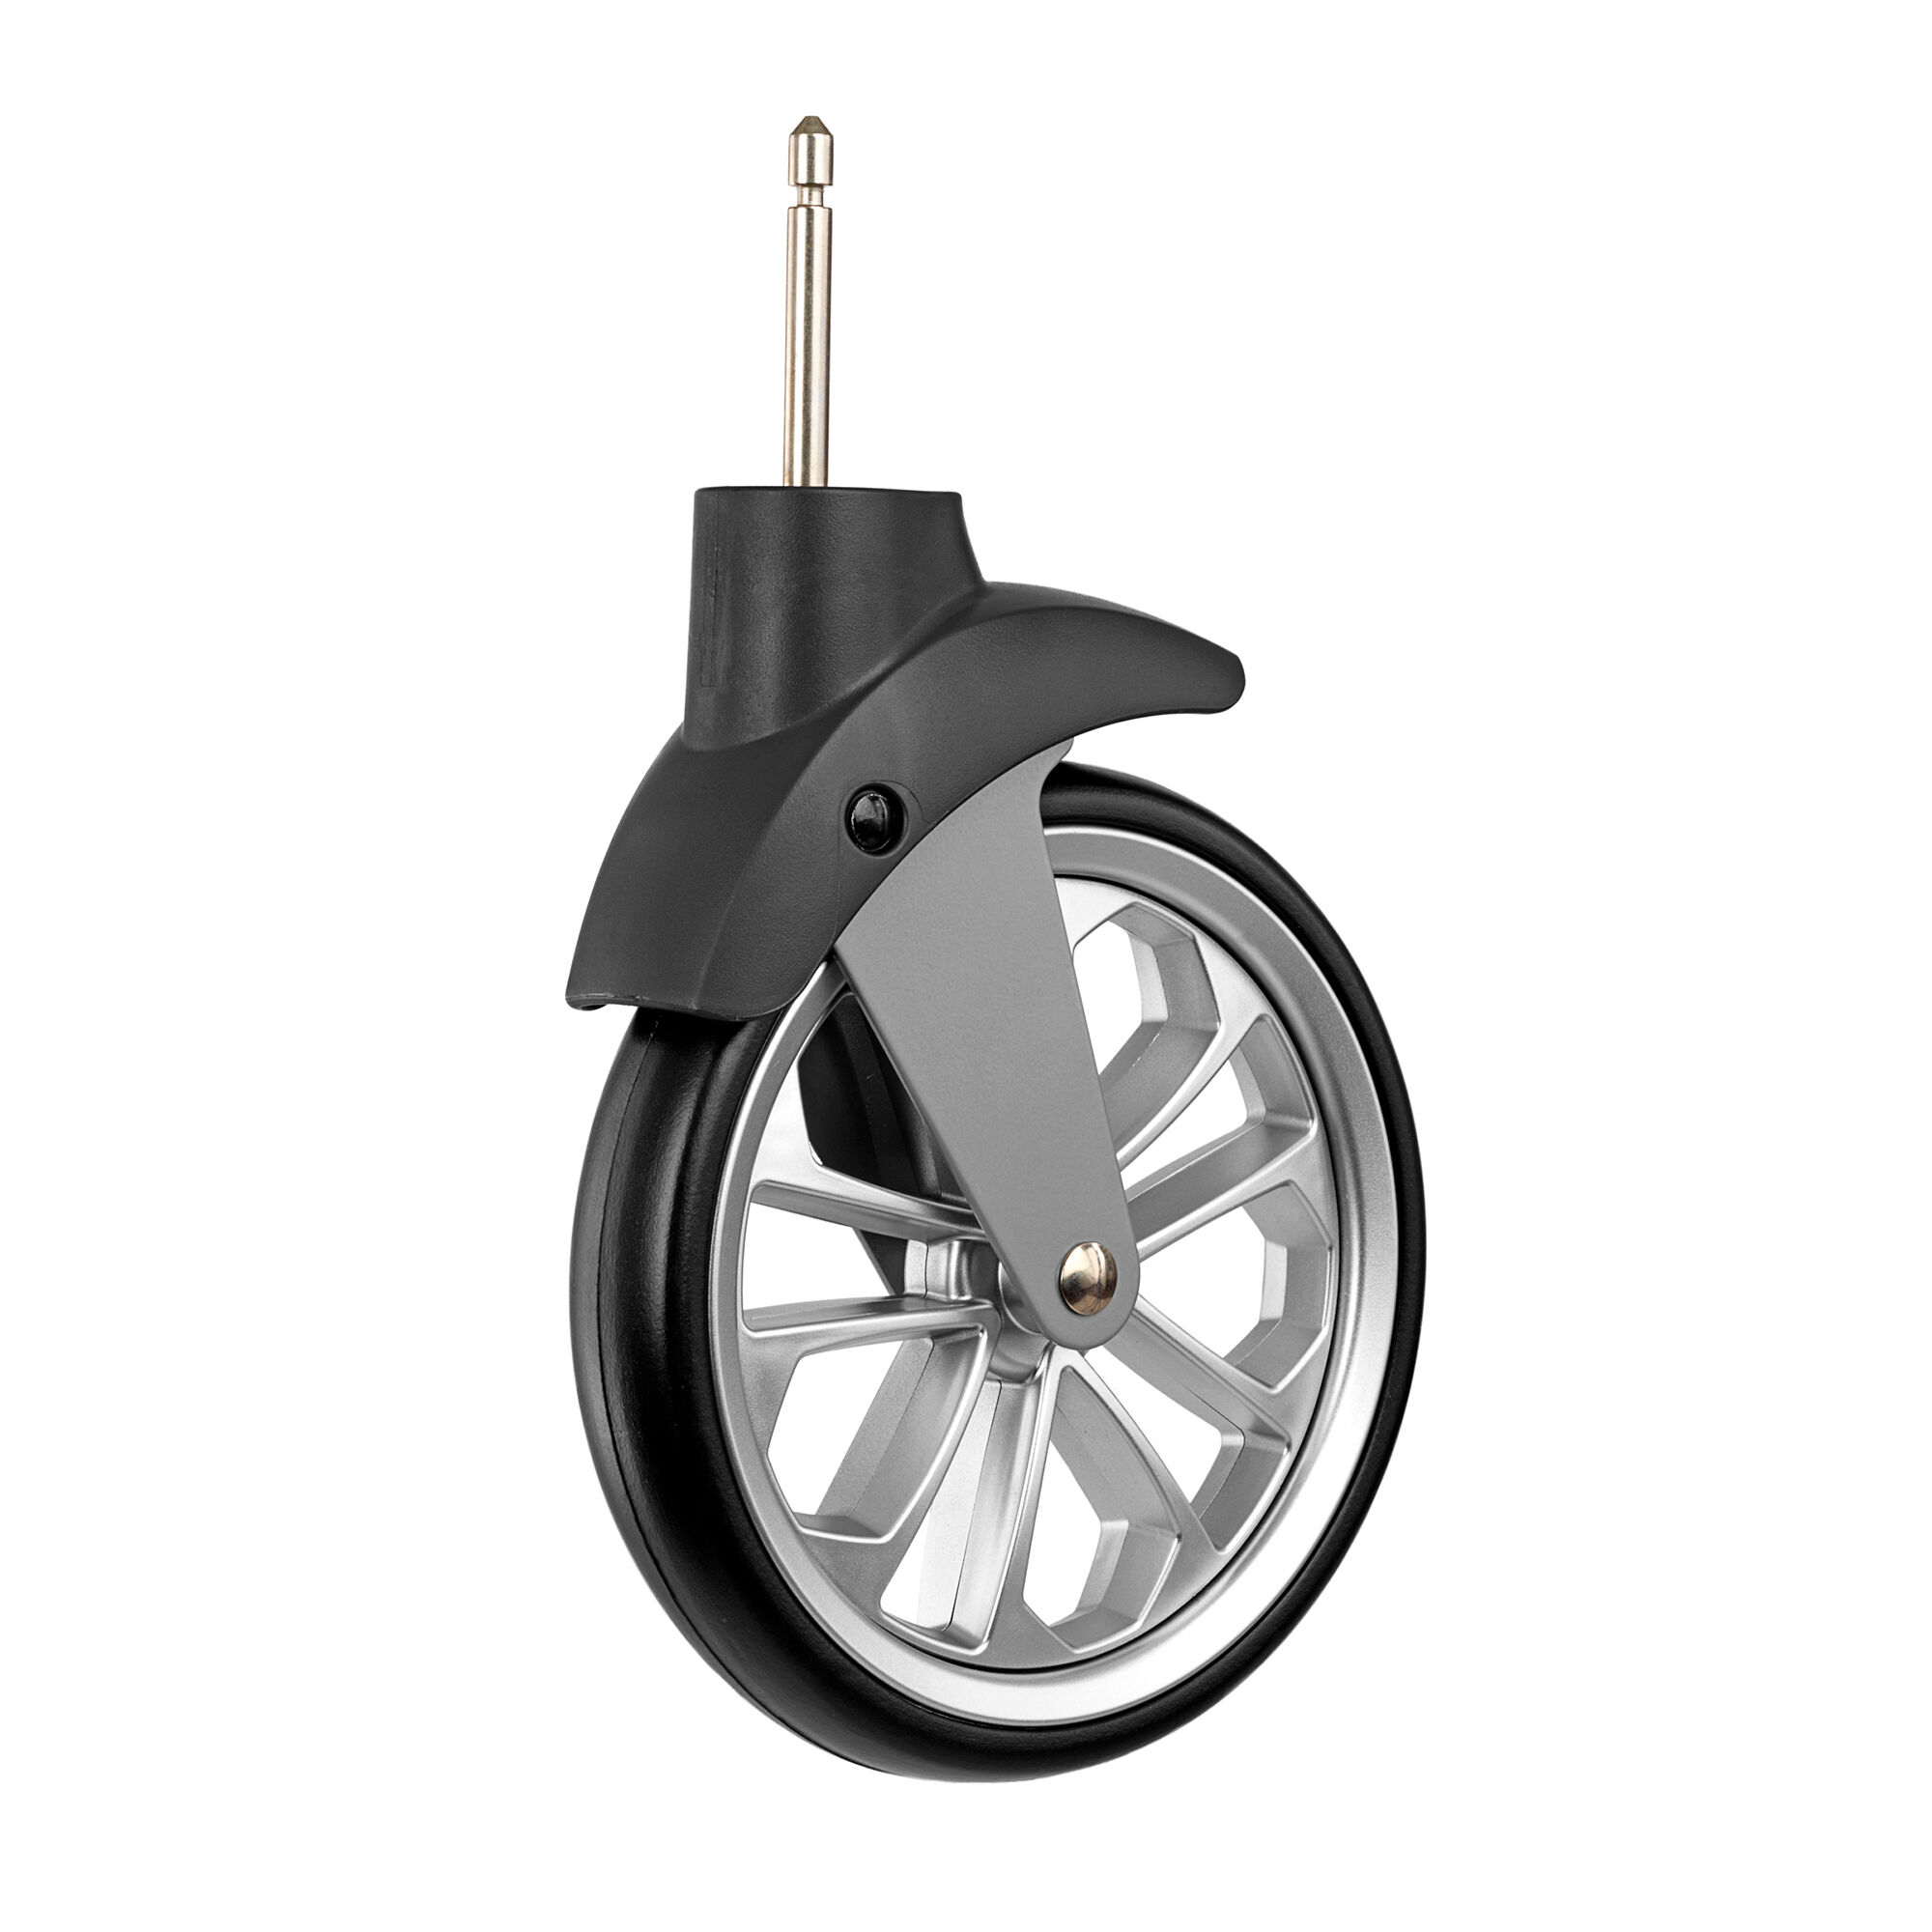 hauck stroller replacement parts